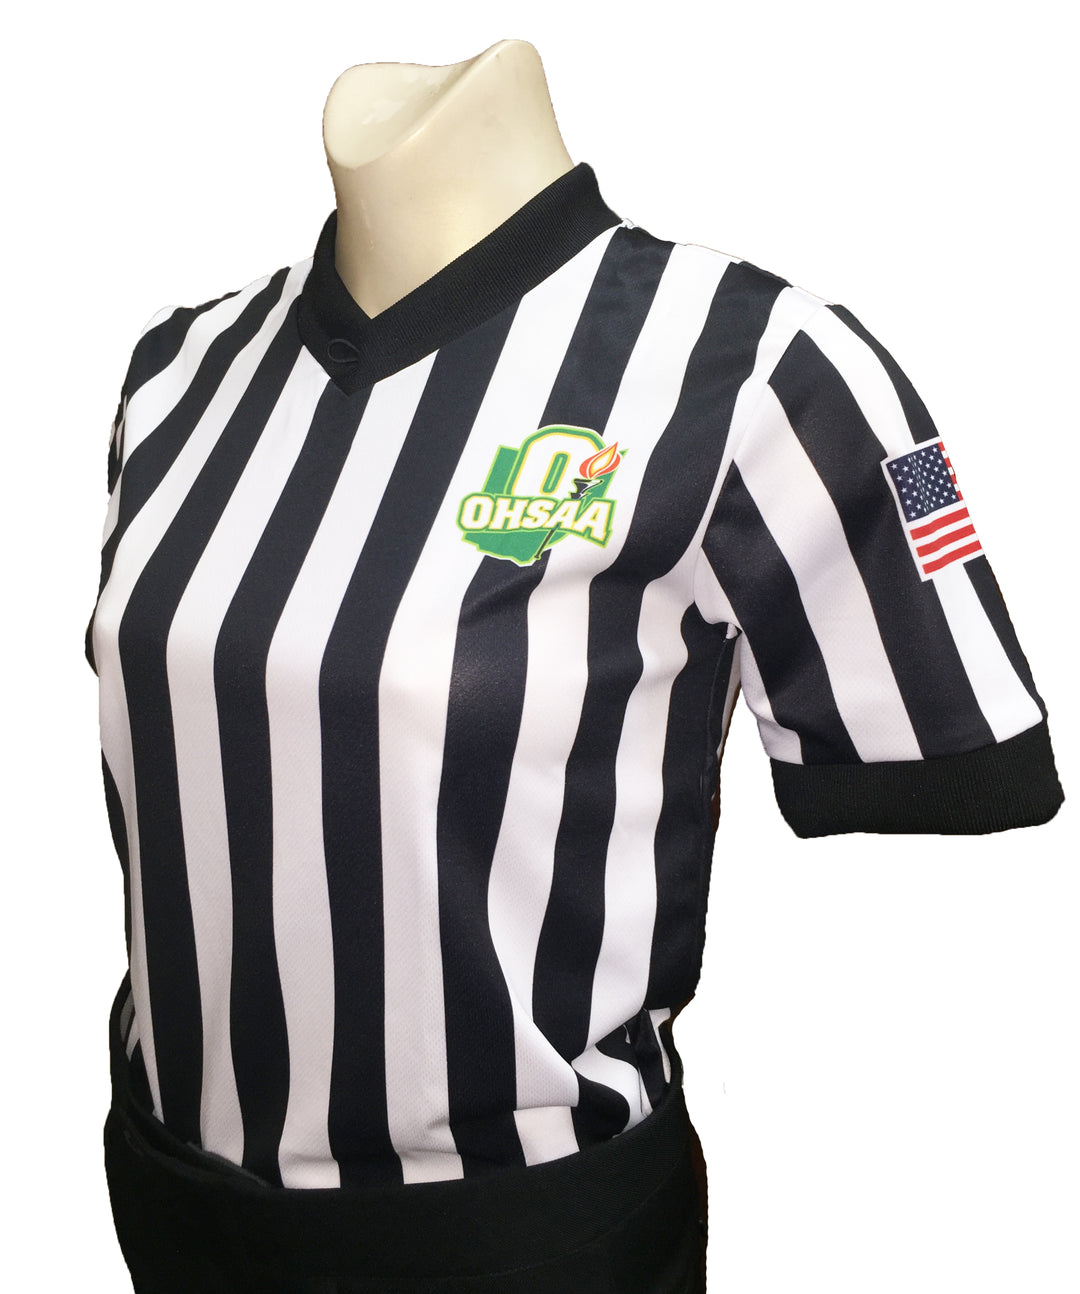 USA211 OH - Smitty "Made in USA" - "OHSAA" Short Sleeve Basketball V-Neck Shirt